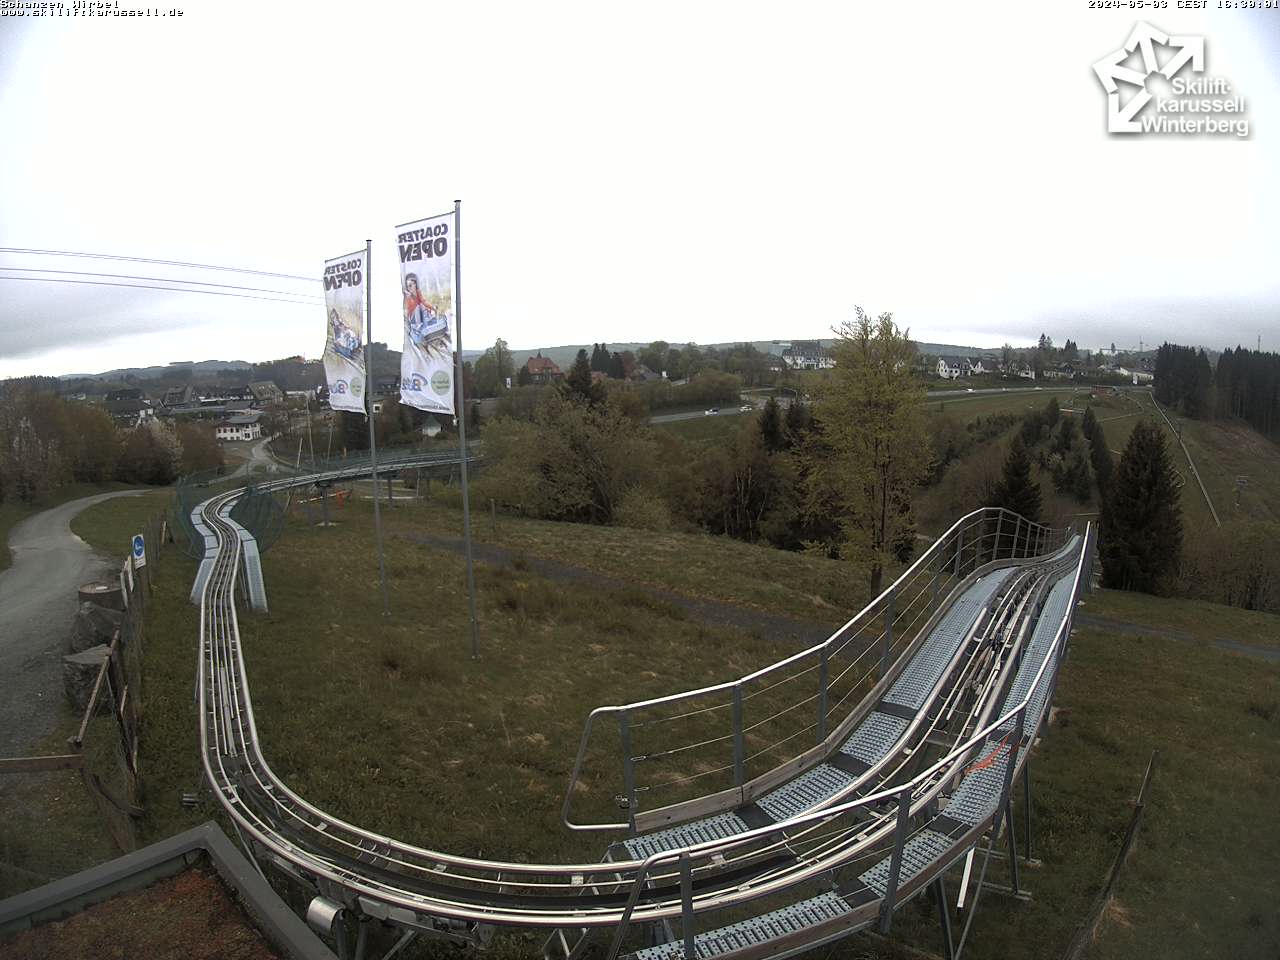 Webcam Schanzen Wirbel - Skiliftkarussell Winterberg